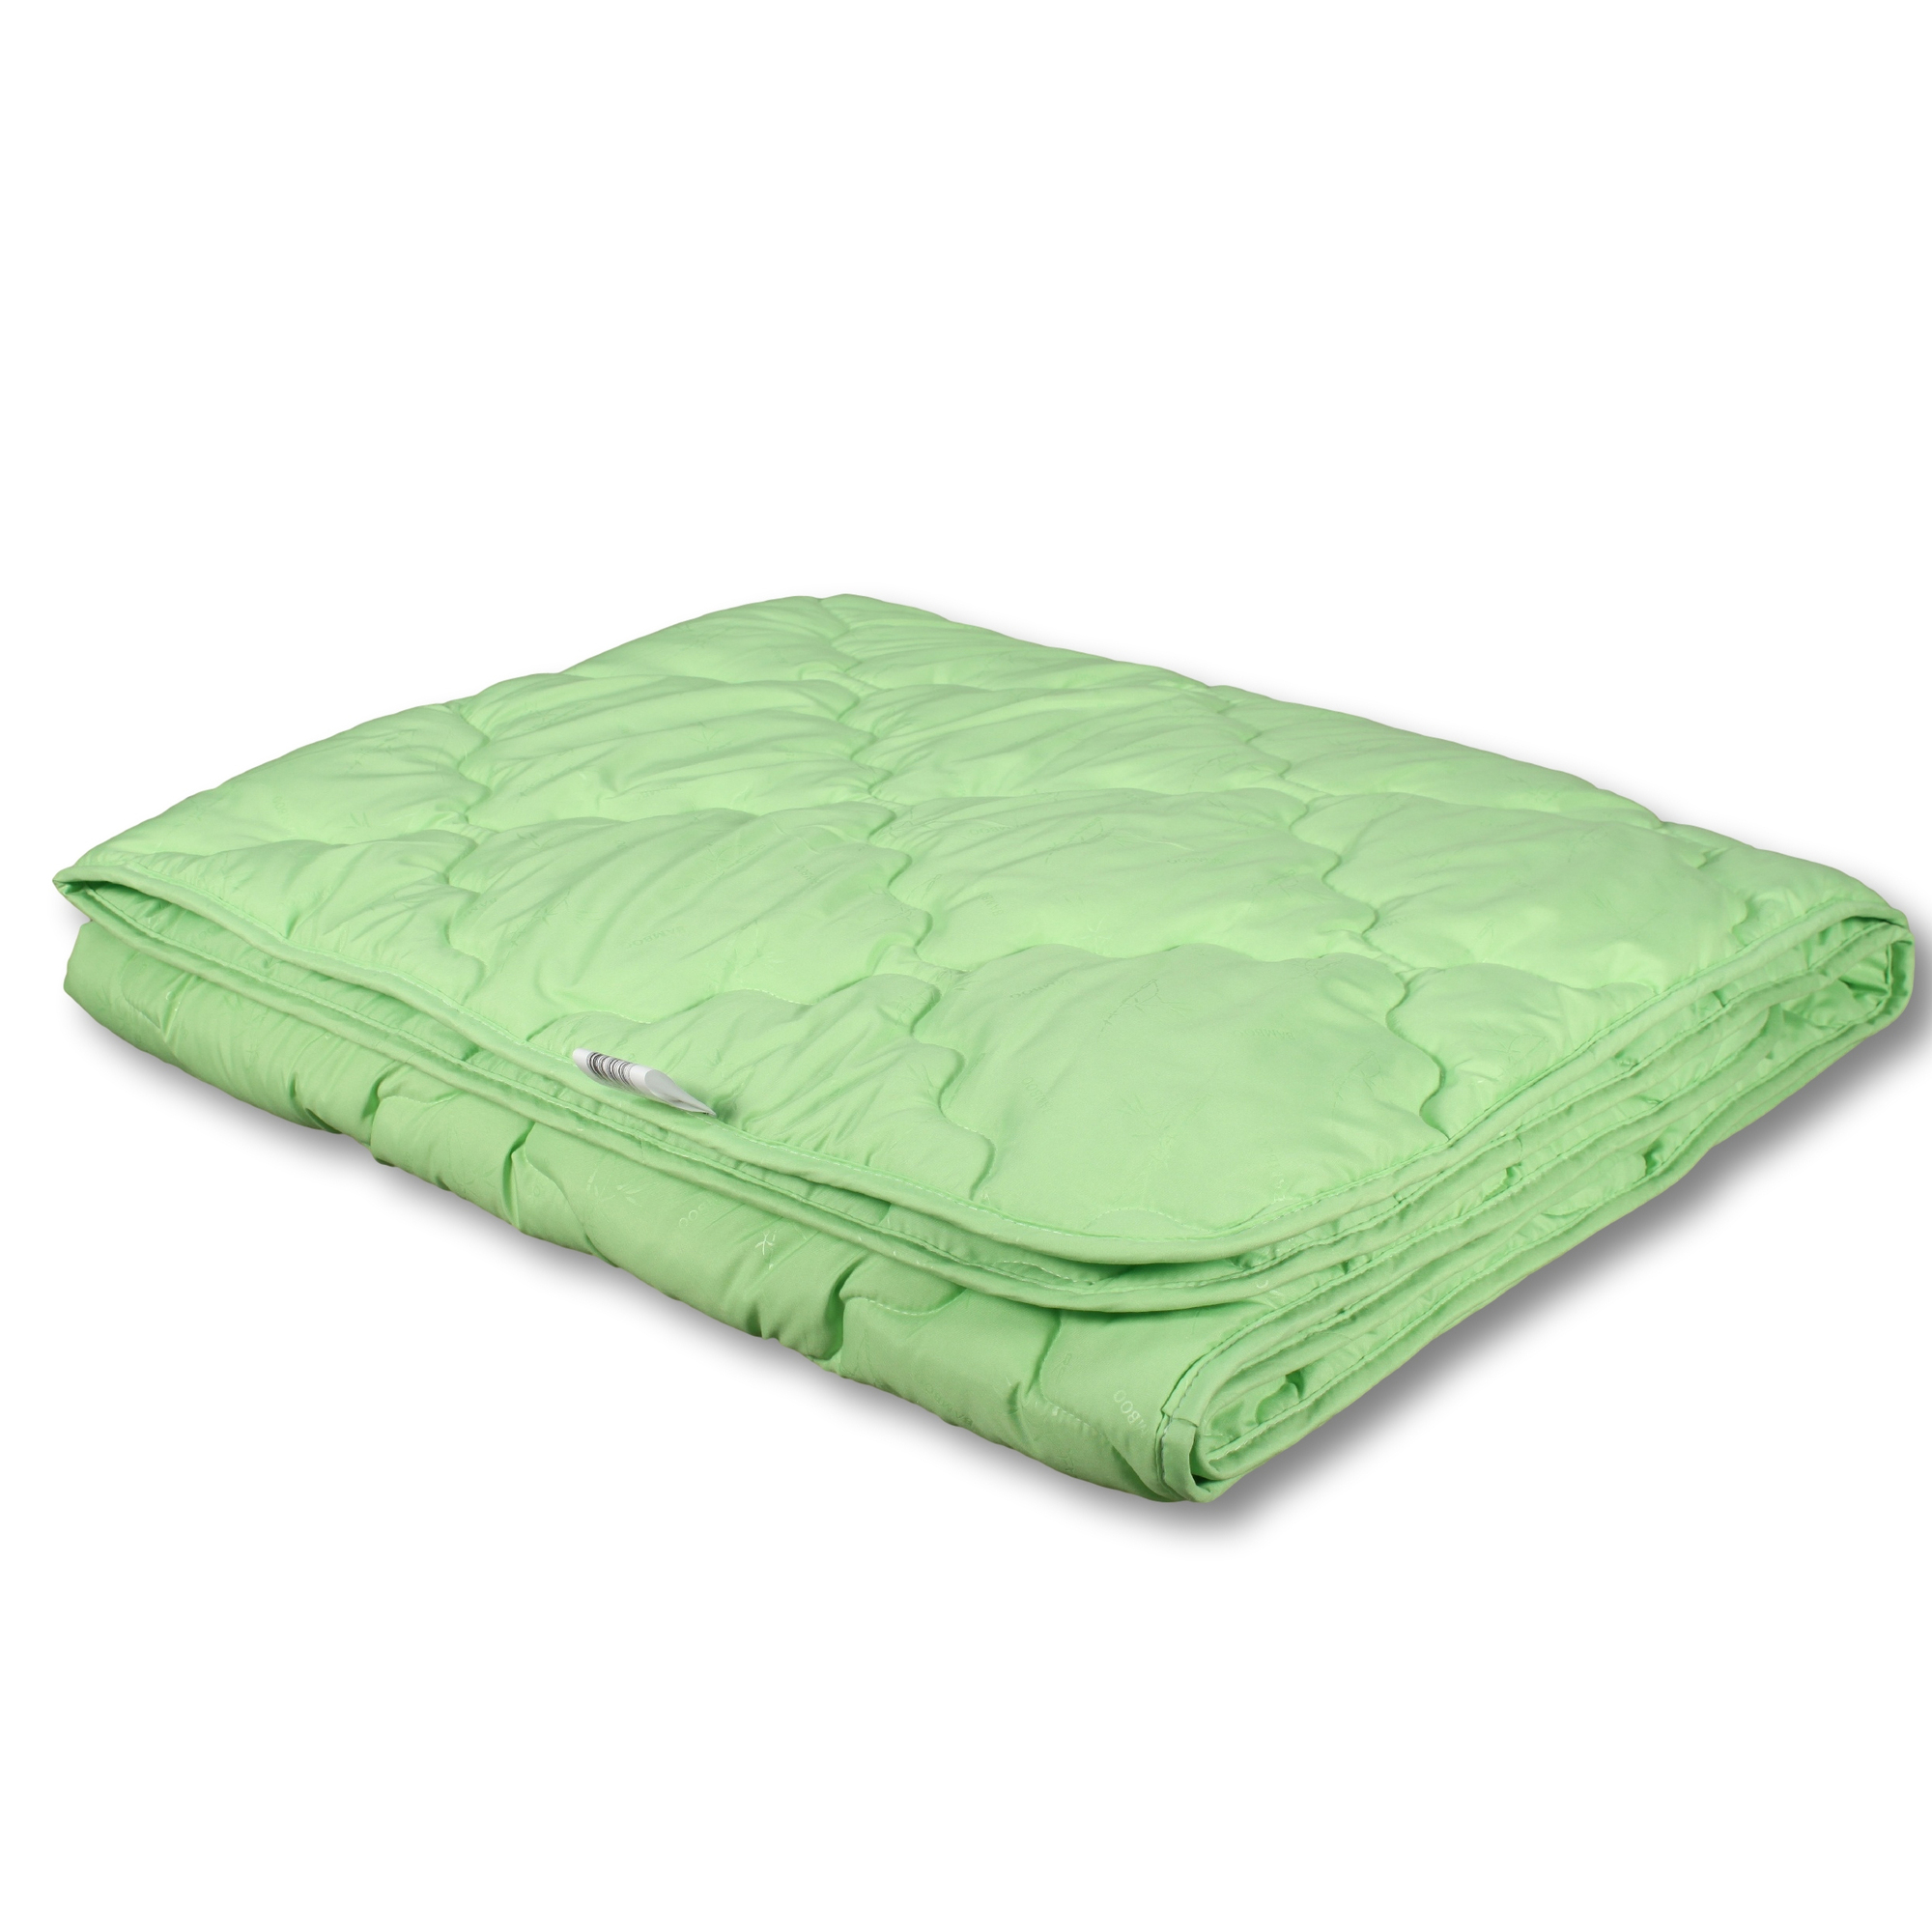 Одеяло Kassandra Летнее (140х205 см), размер 140х205 см, цвет зеленый avt71986 Одеяло Kassandra Летнее (140х205 см) - фото 1